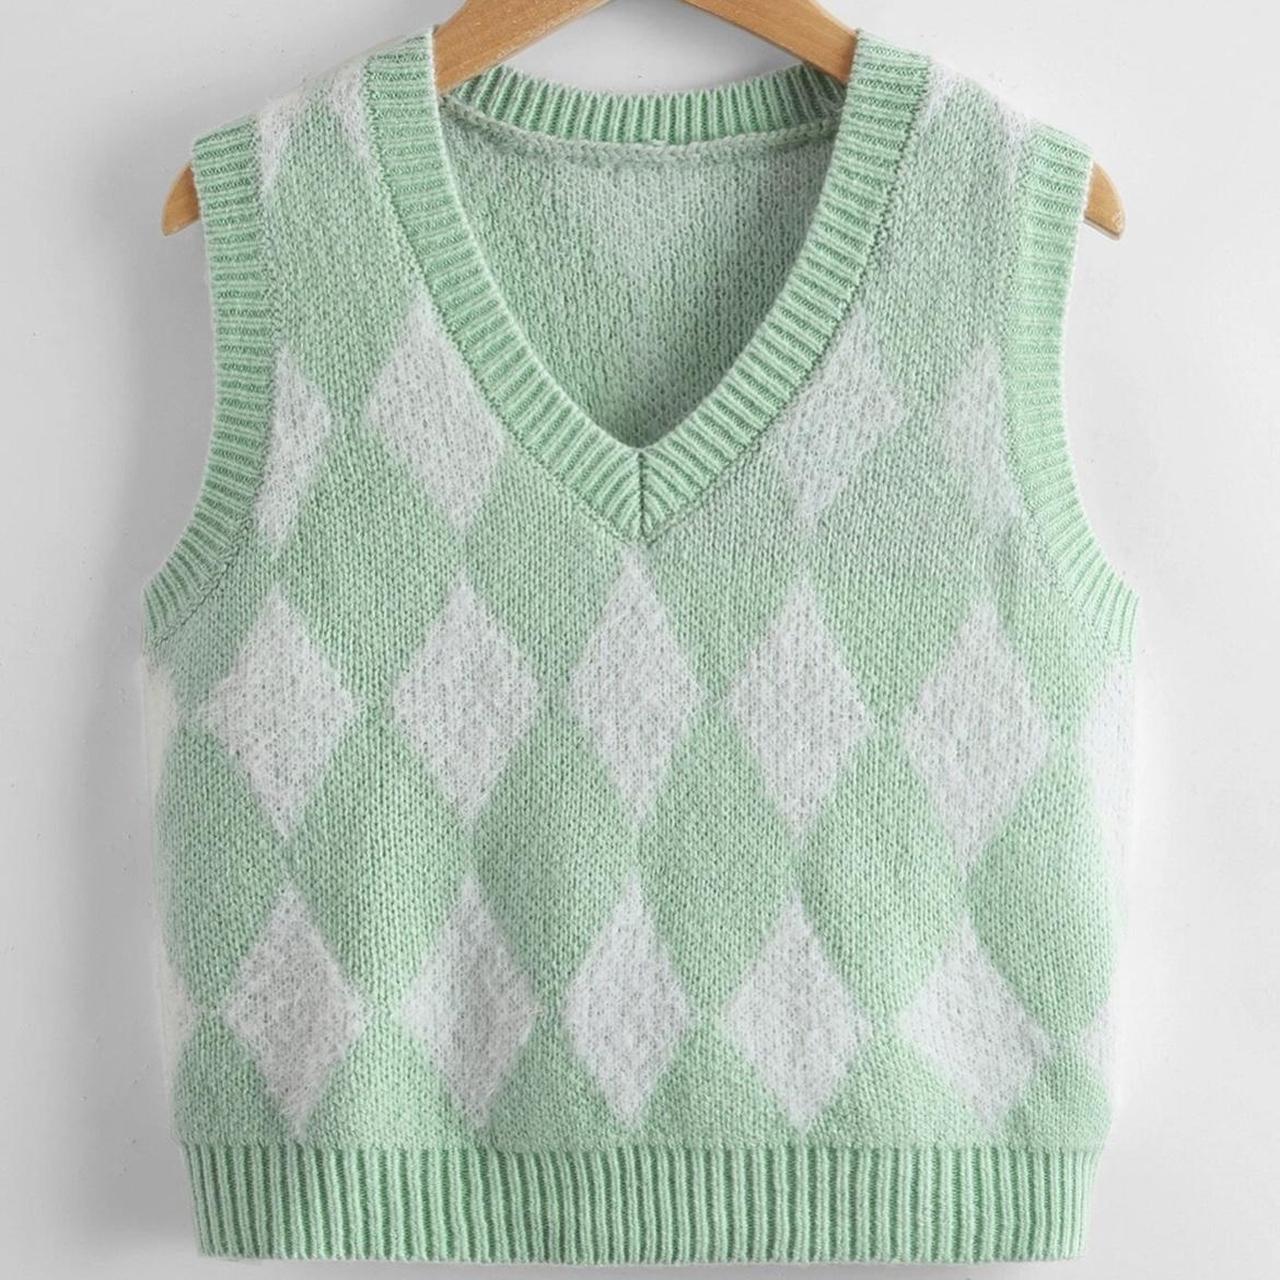 SHEIN Argyle pattern sweater vest in mint green and... - Depop